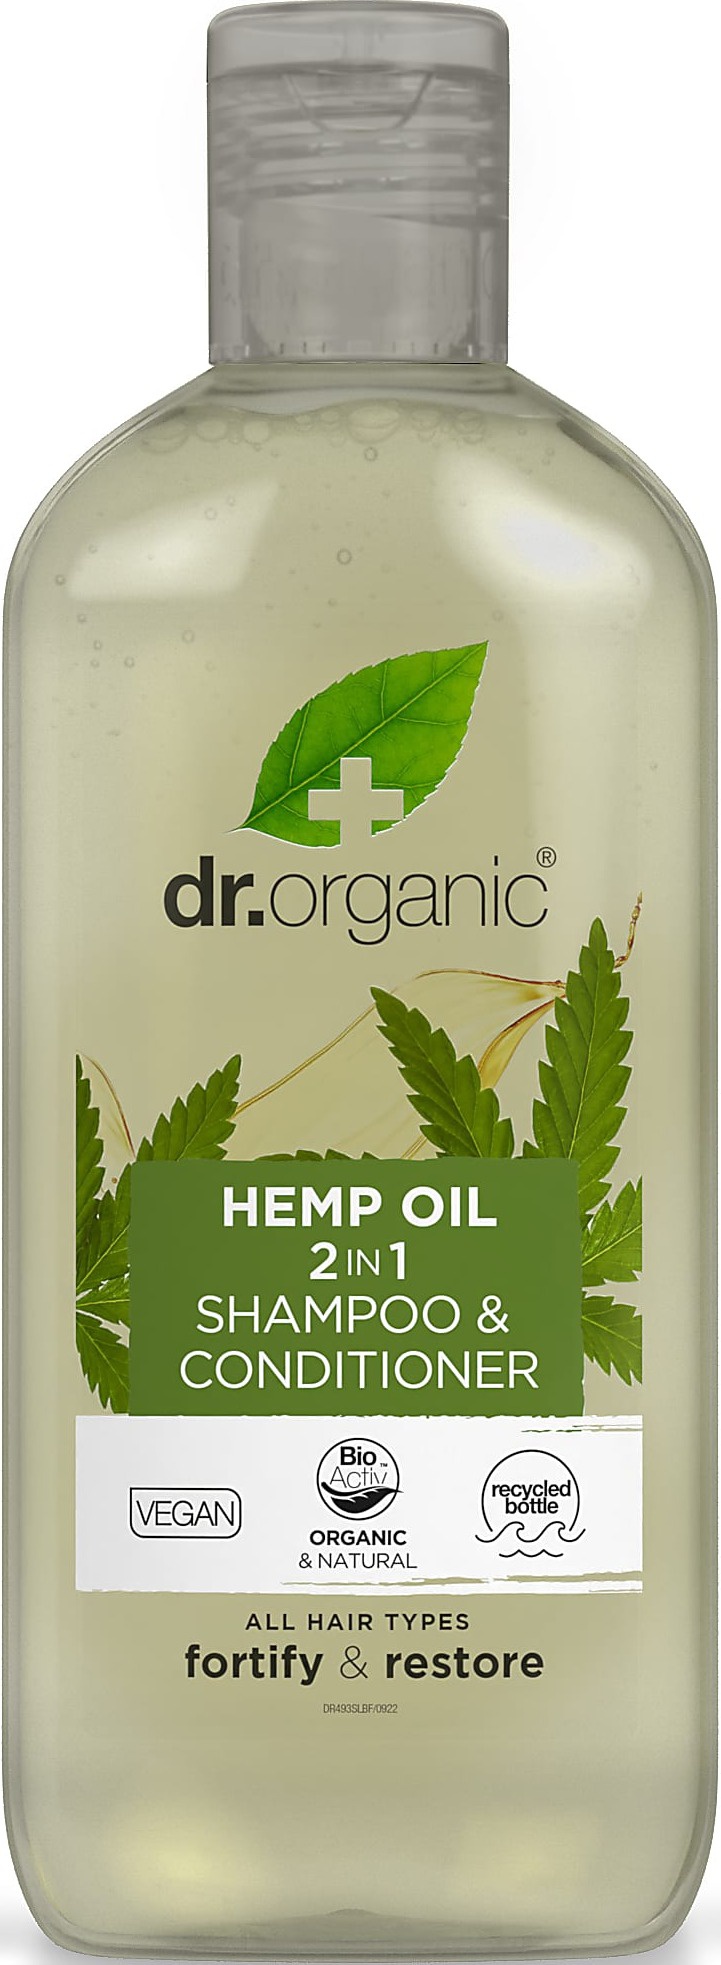 Dr Organic Hemp Oil 2in1 Shampoo & Conditioner